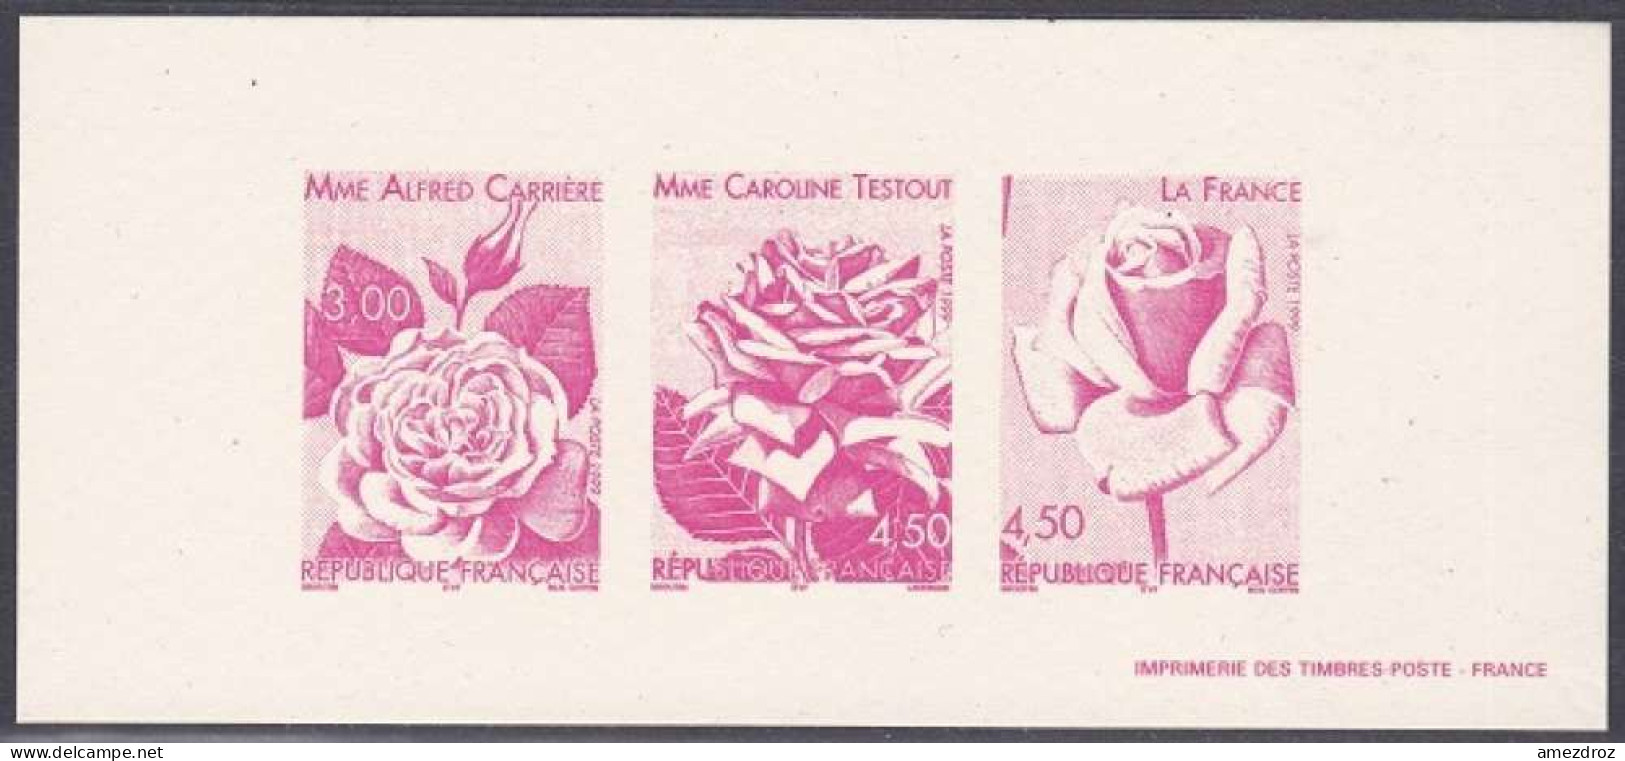 France Gravure Officielle - Roses Diverses (4) - Documents Of Postal Services